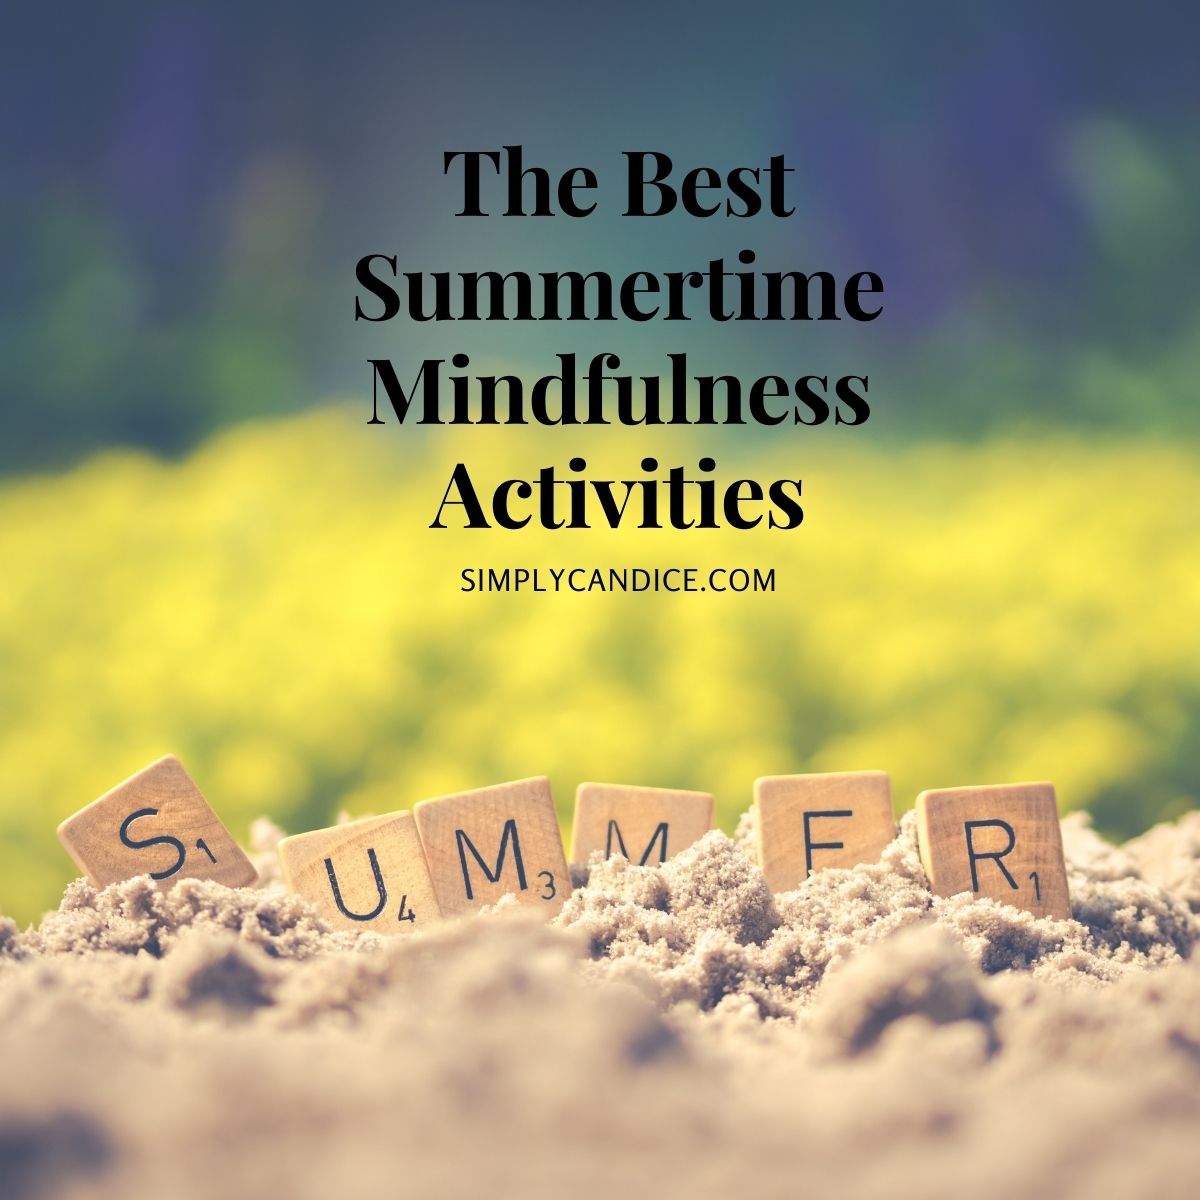 The Best Summertime Mindfulness Activities